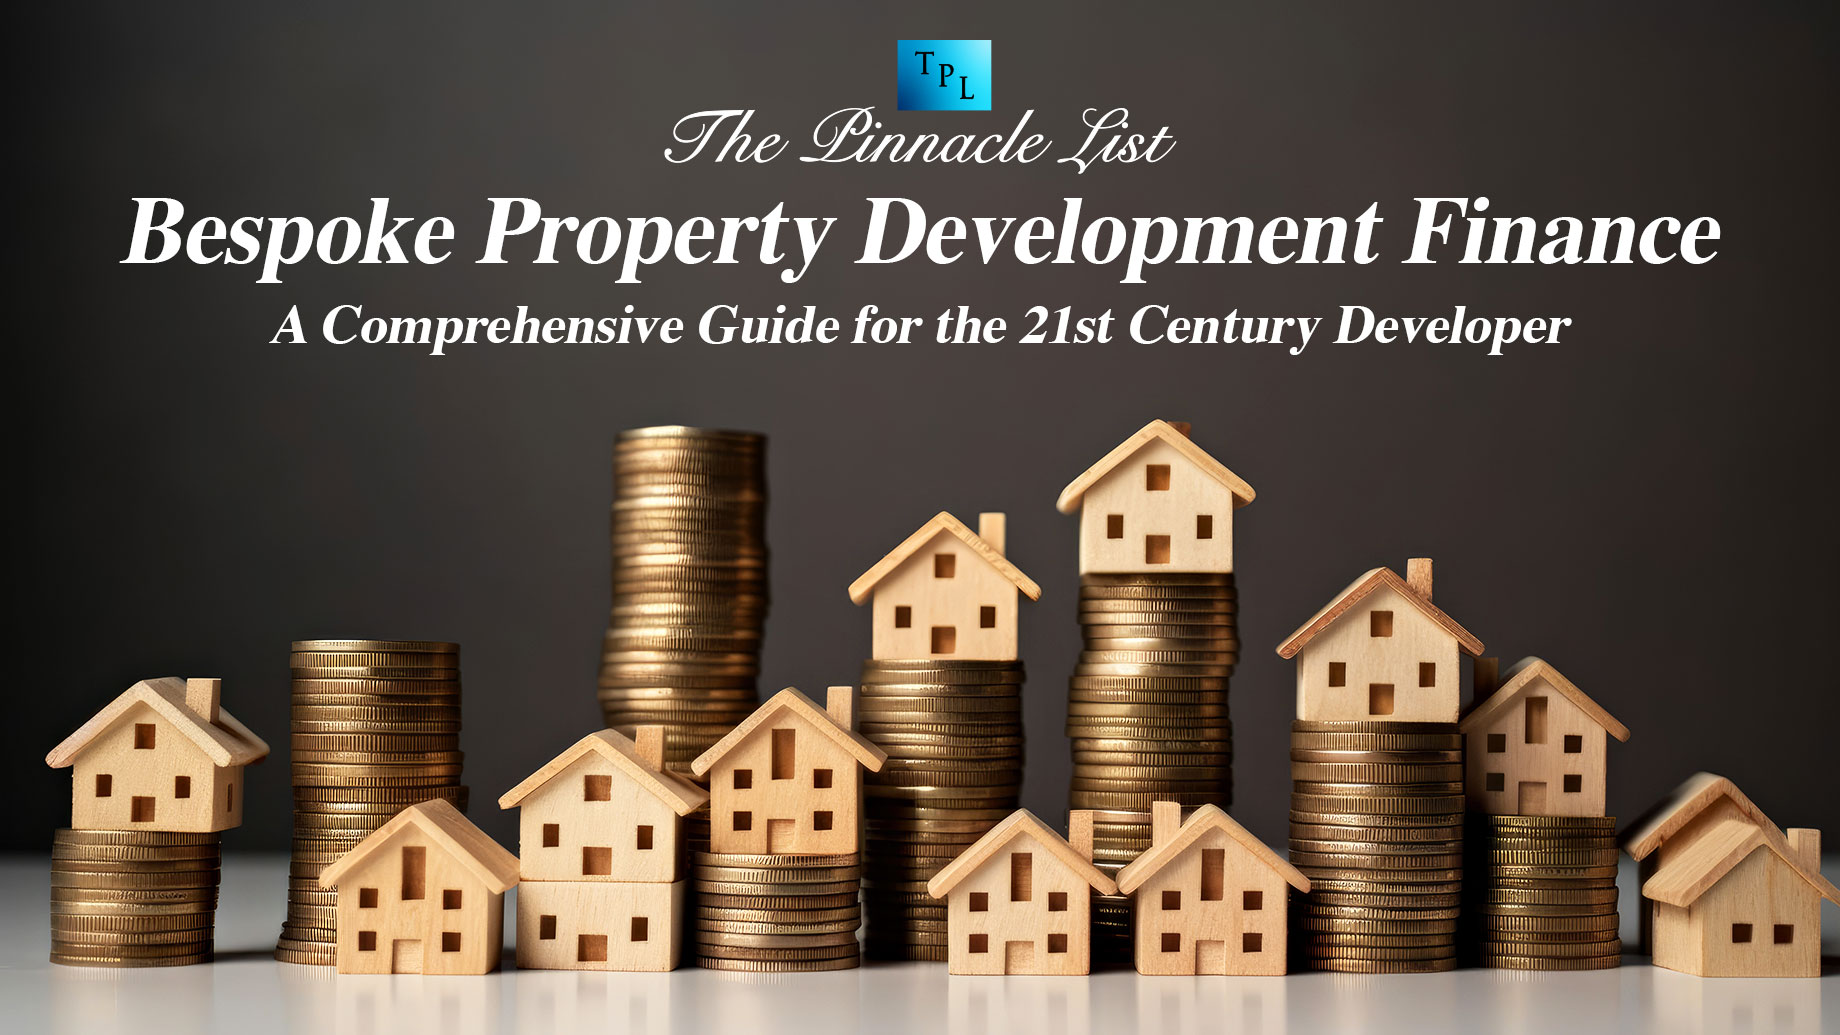 Bespoke Property Development Finance: A Comprehensive Guide for the 21st Century Developer